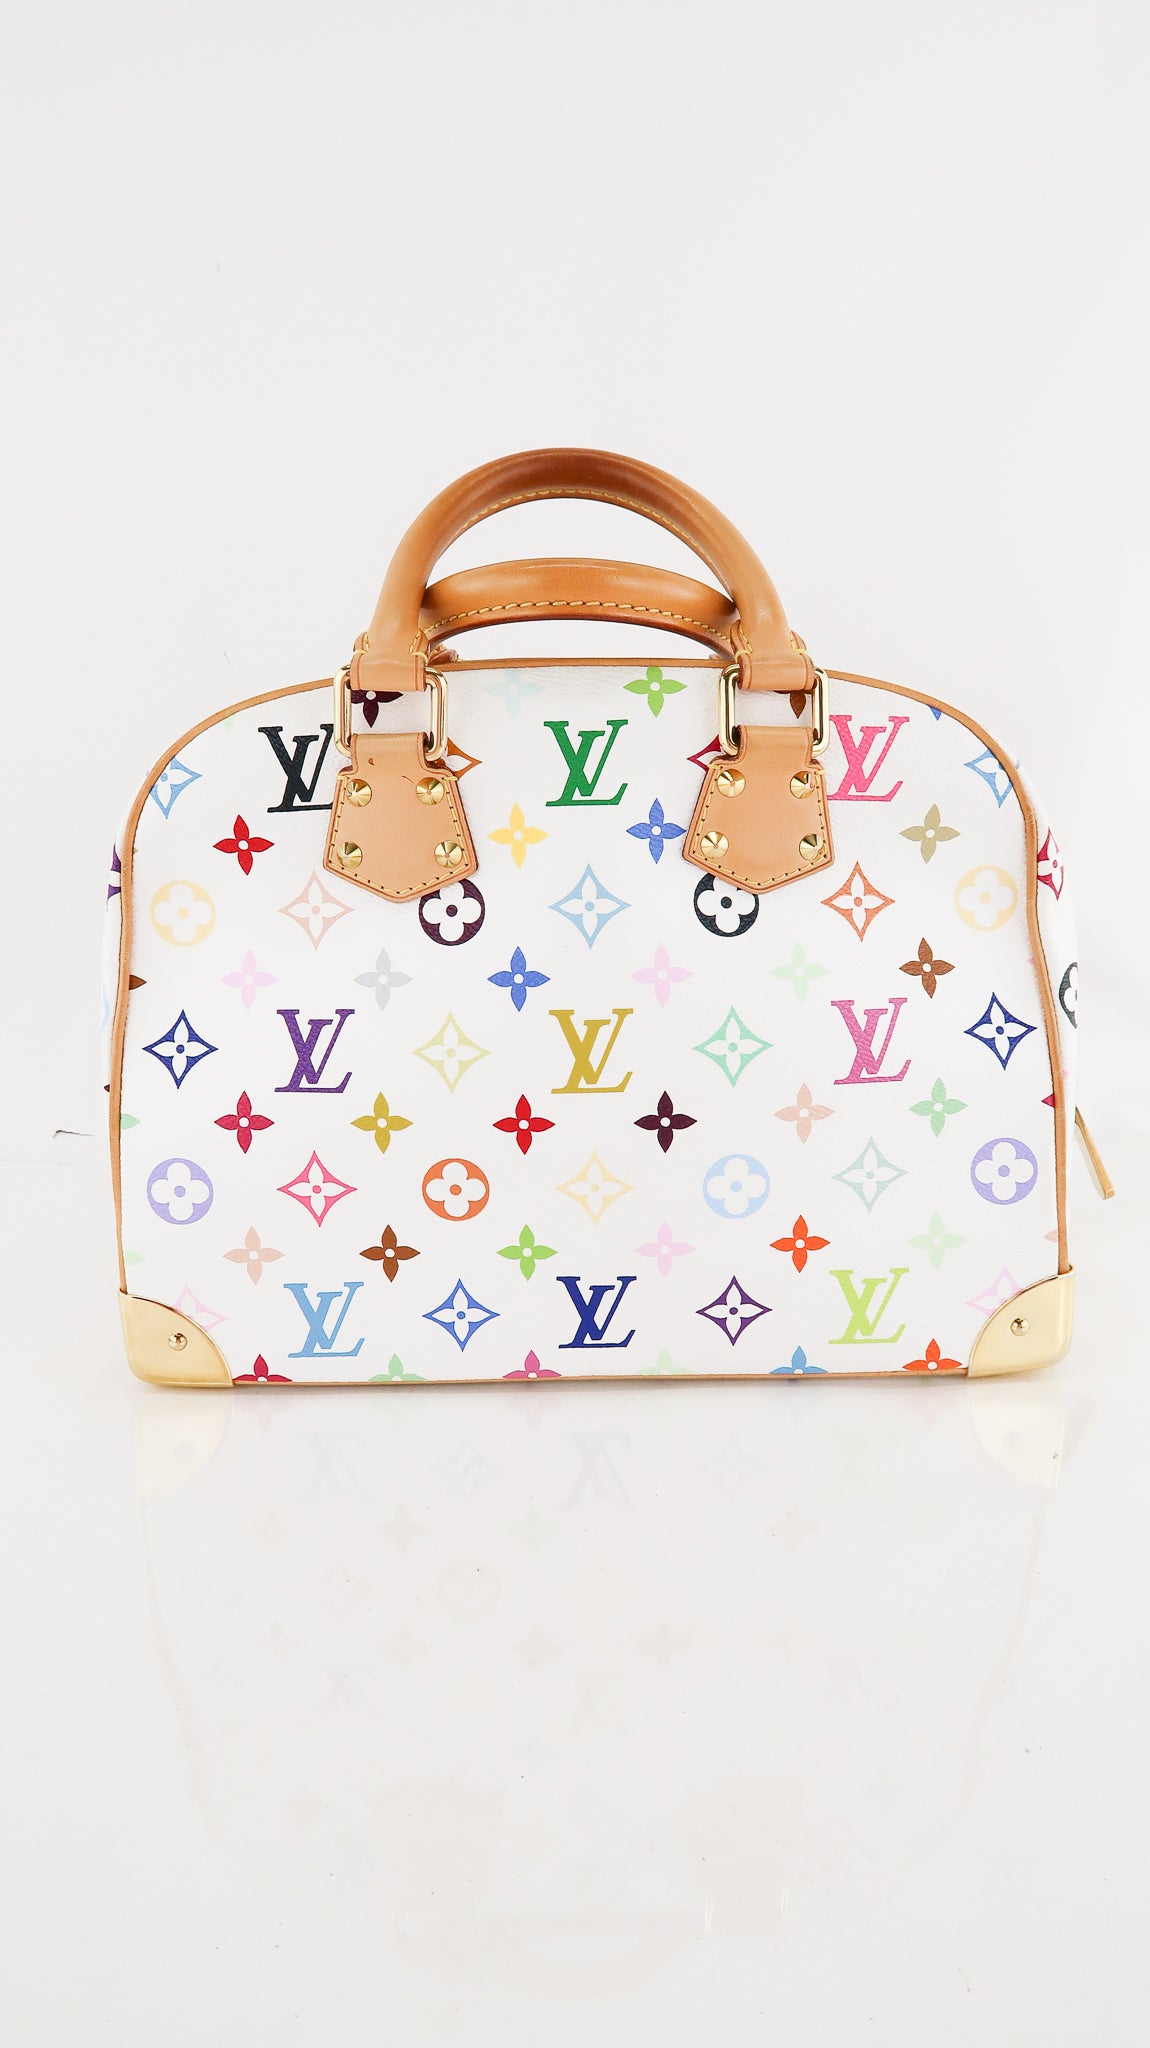 Louis+Vuitton+purse+*White+monogram+collection+-+Tootsie+roll - Women's  Handbags - Pismo Beach, California, Facebook Marketplace